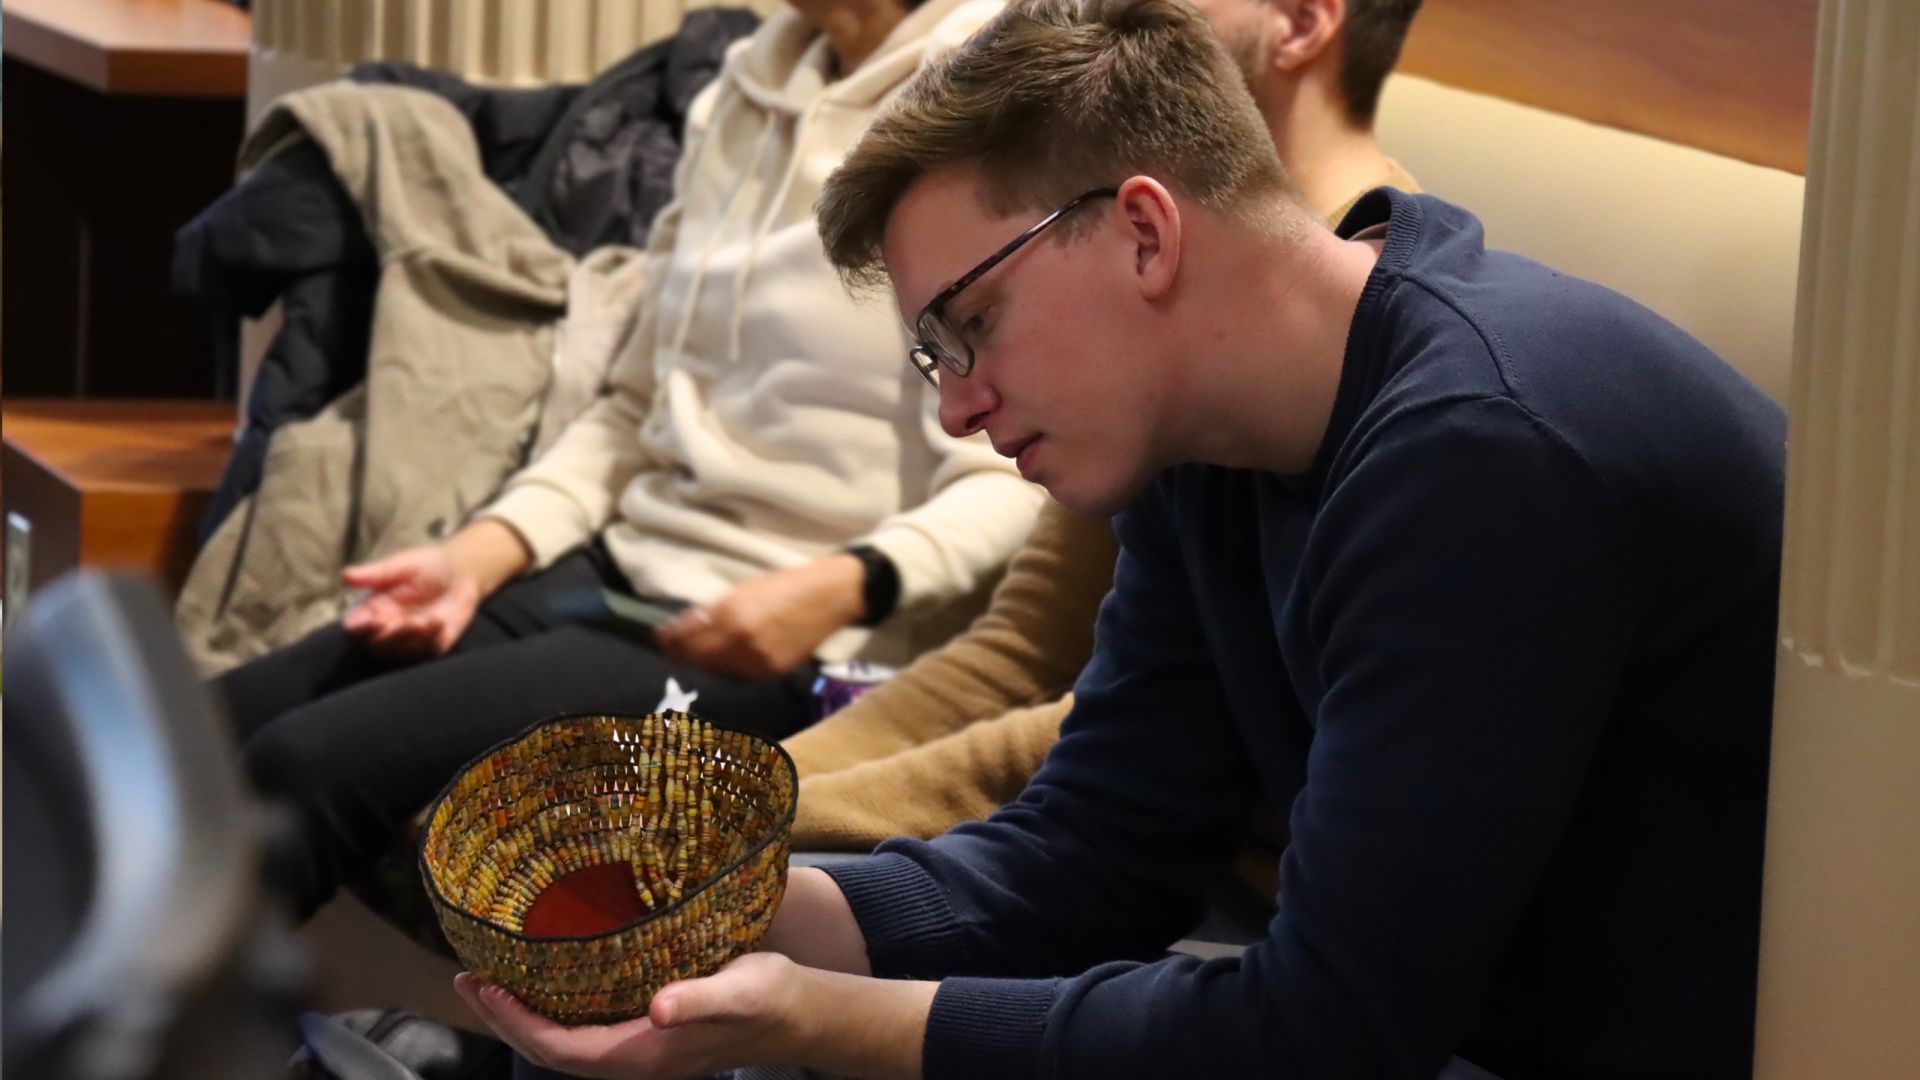 Art History PhD student examining an ornately woven and beaded bowl.